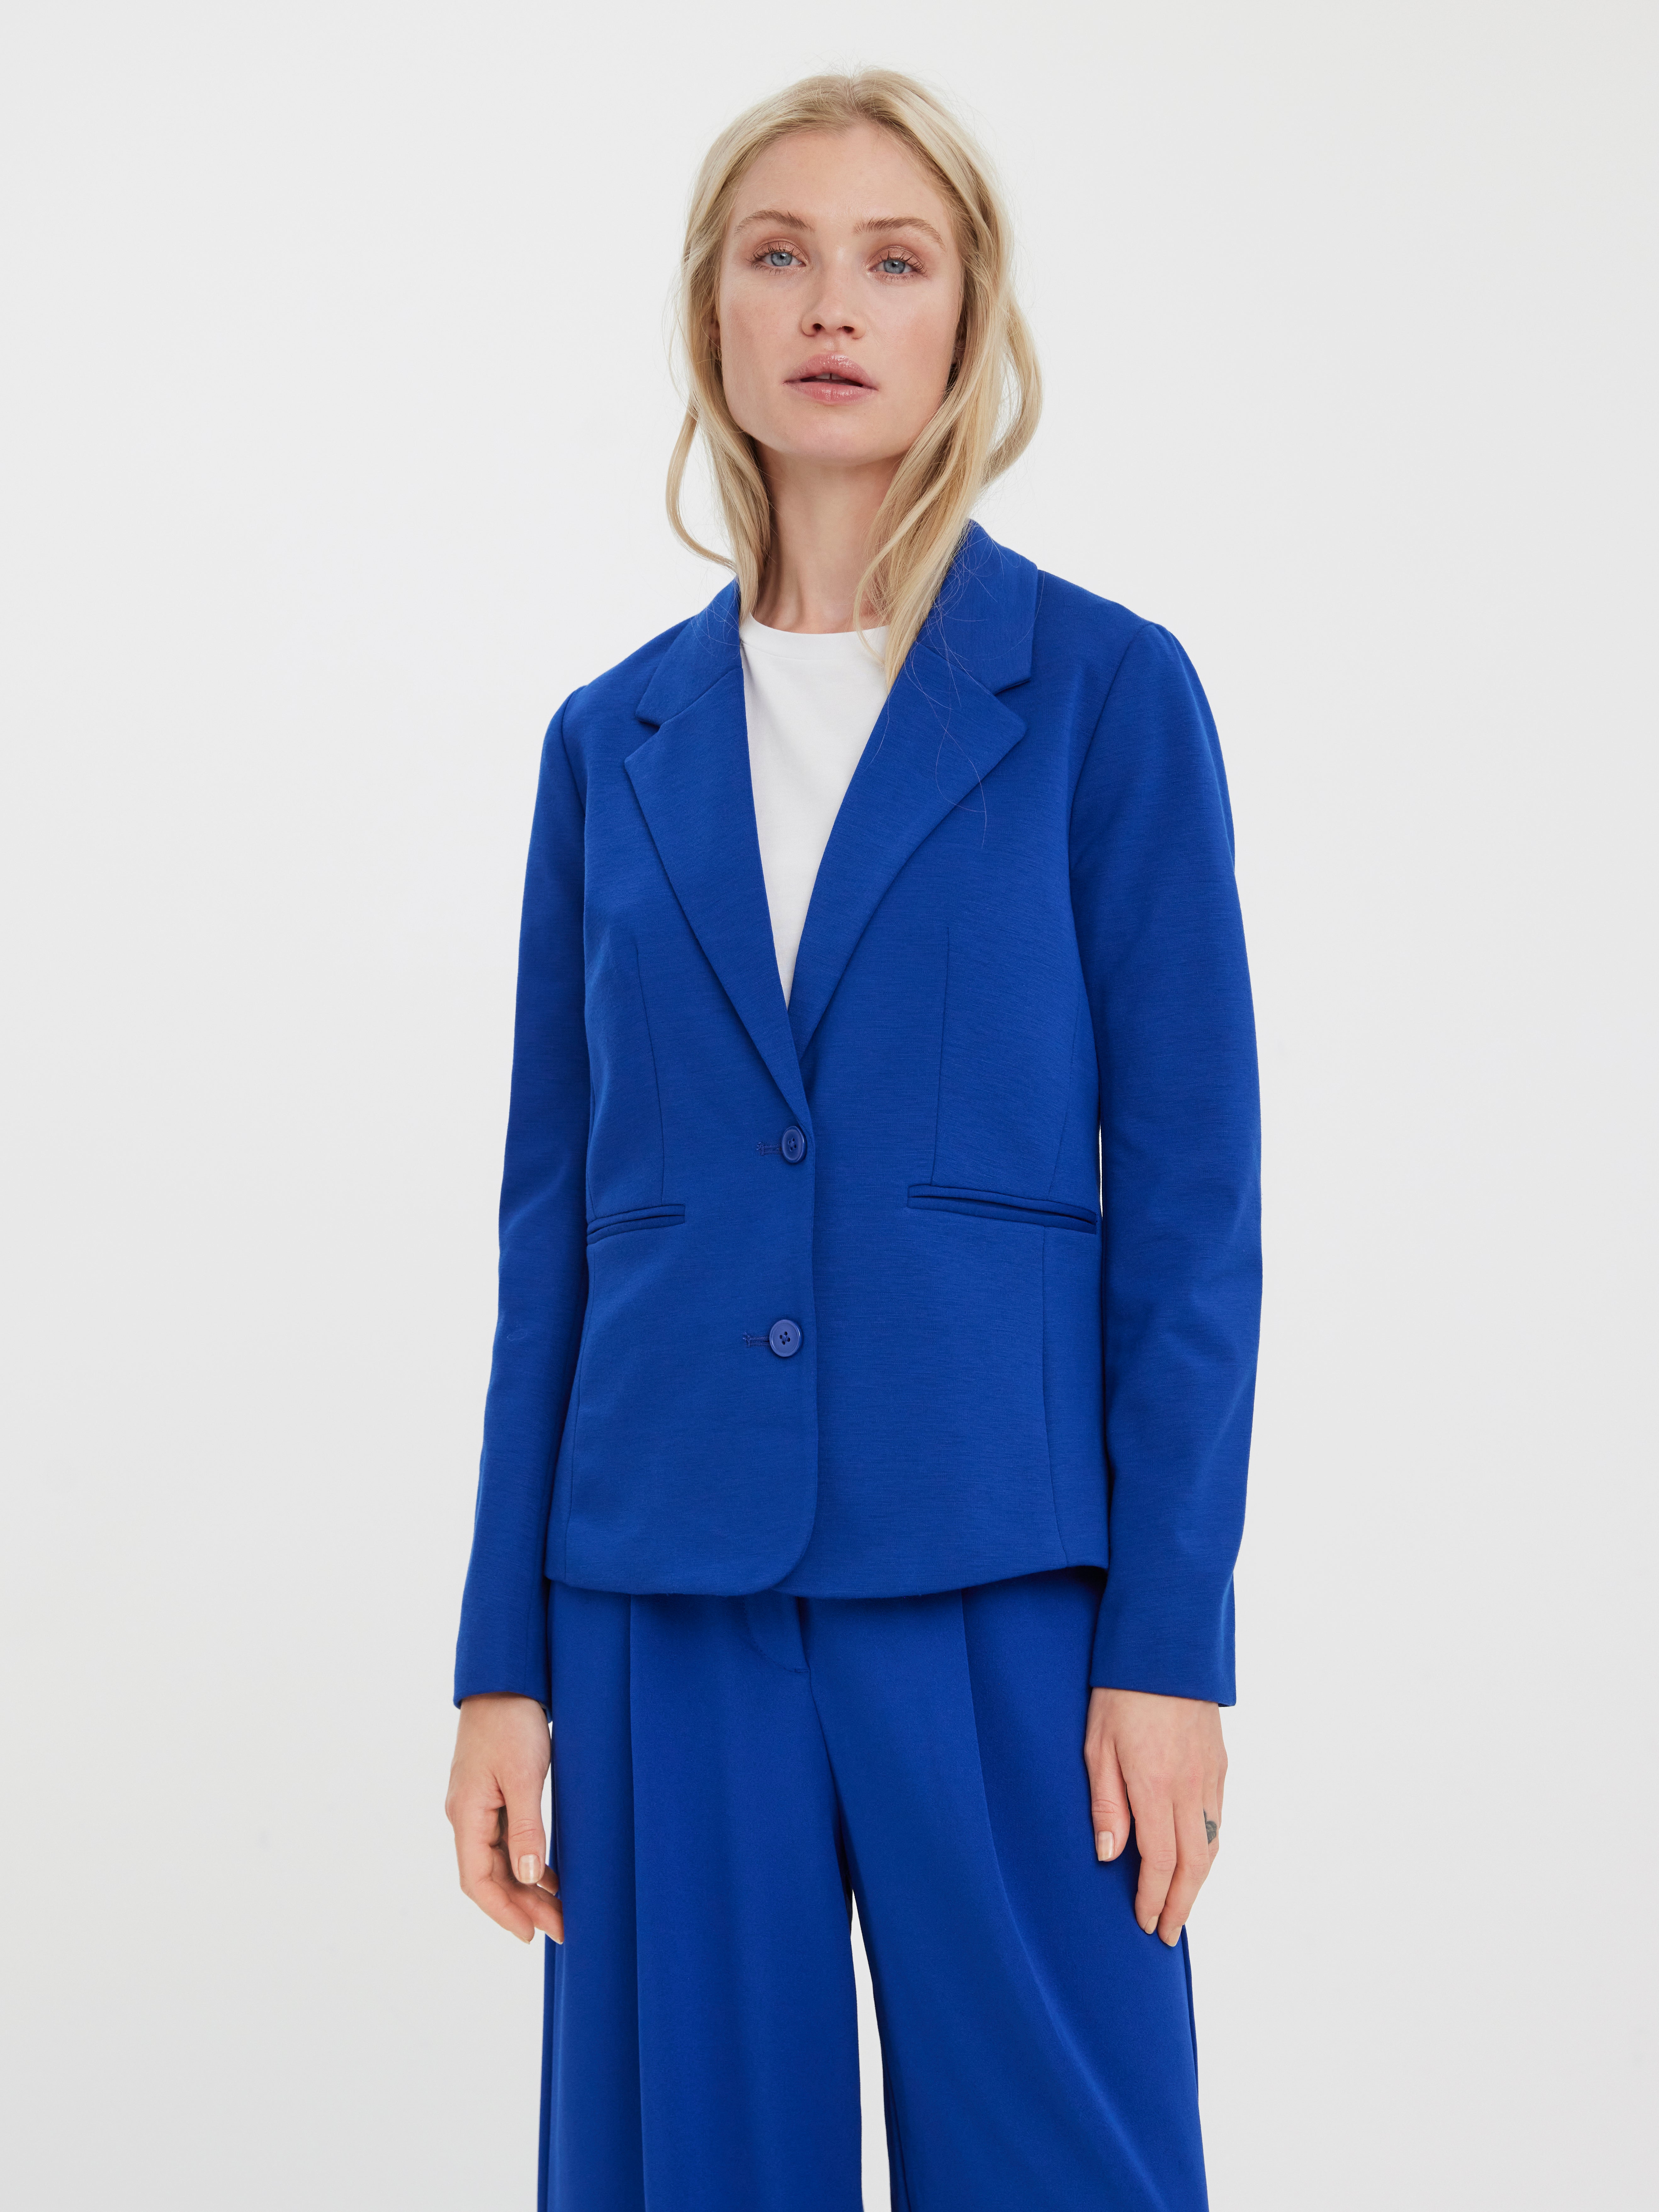 discount 56% WOMEN FASHION Jackets Casual Vero Moda blazer Navy Blue 38                  EU 